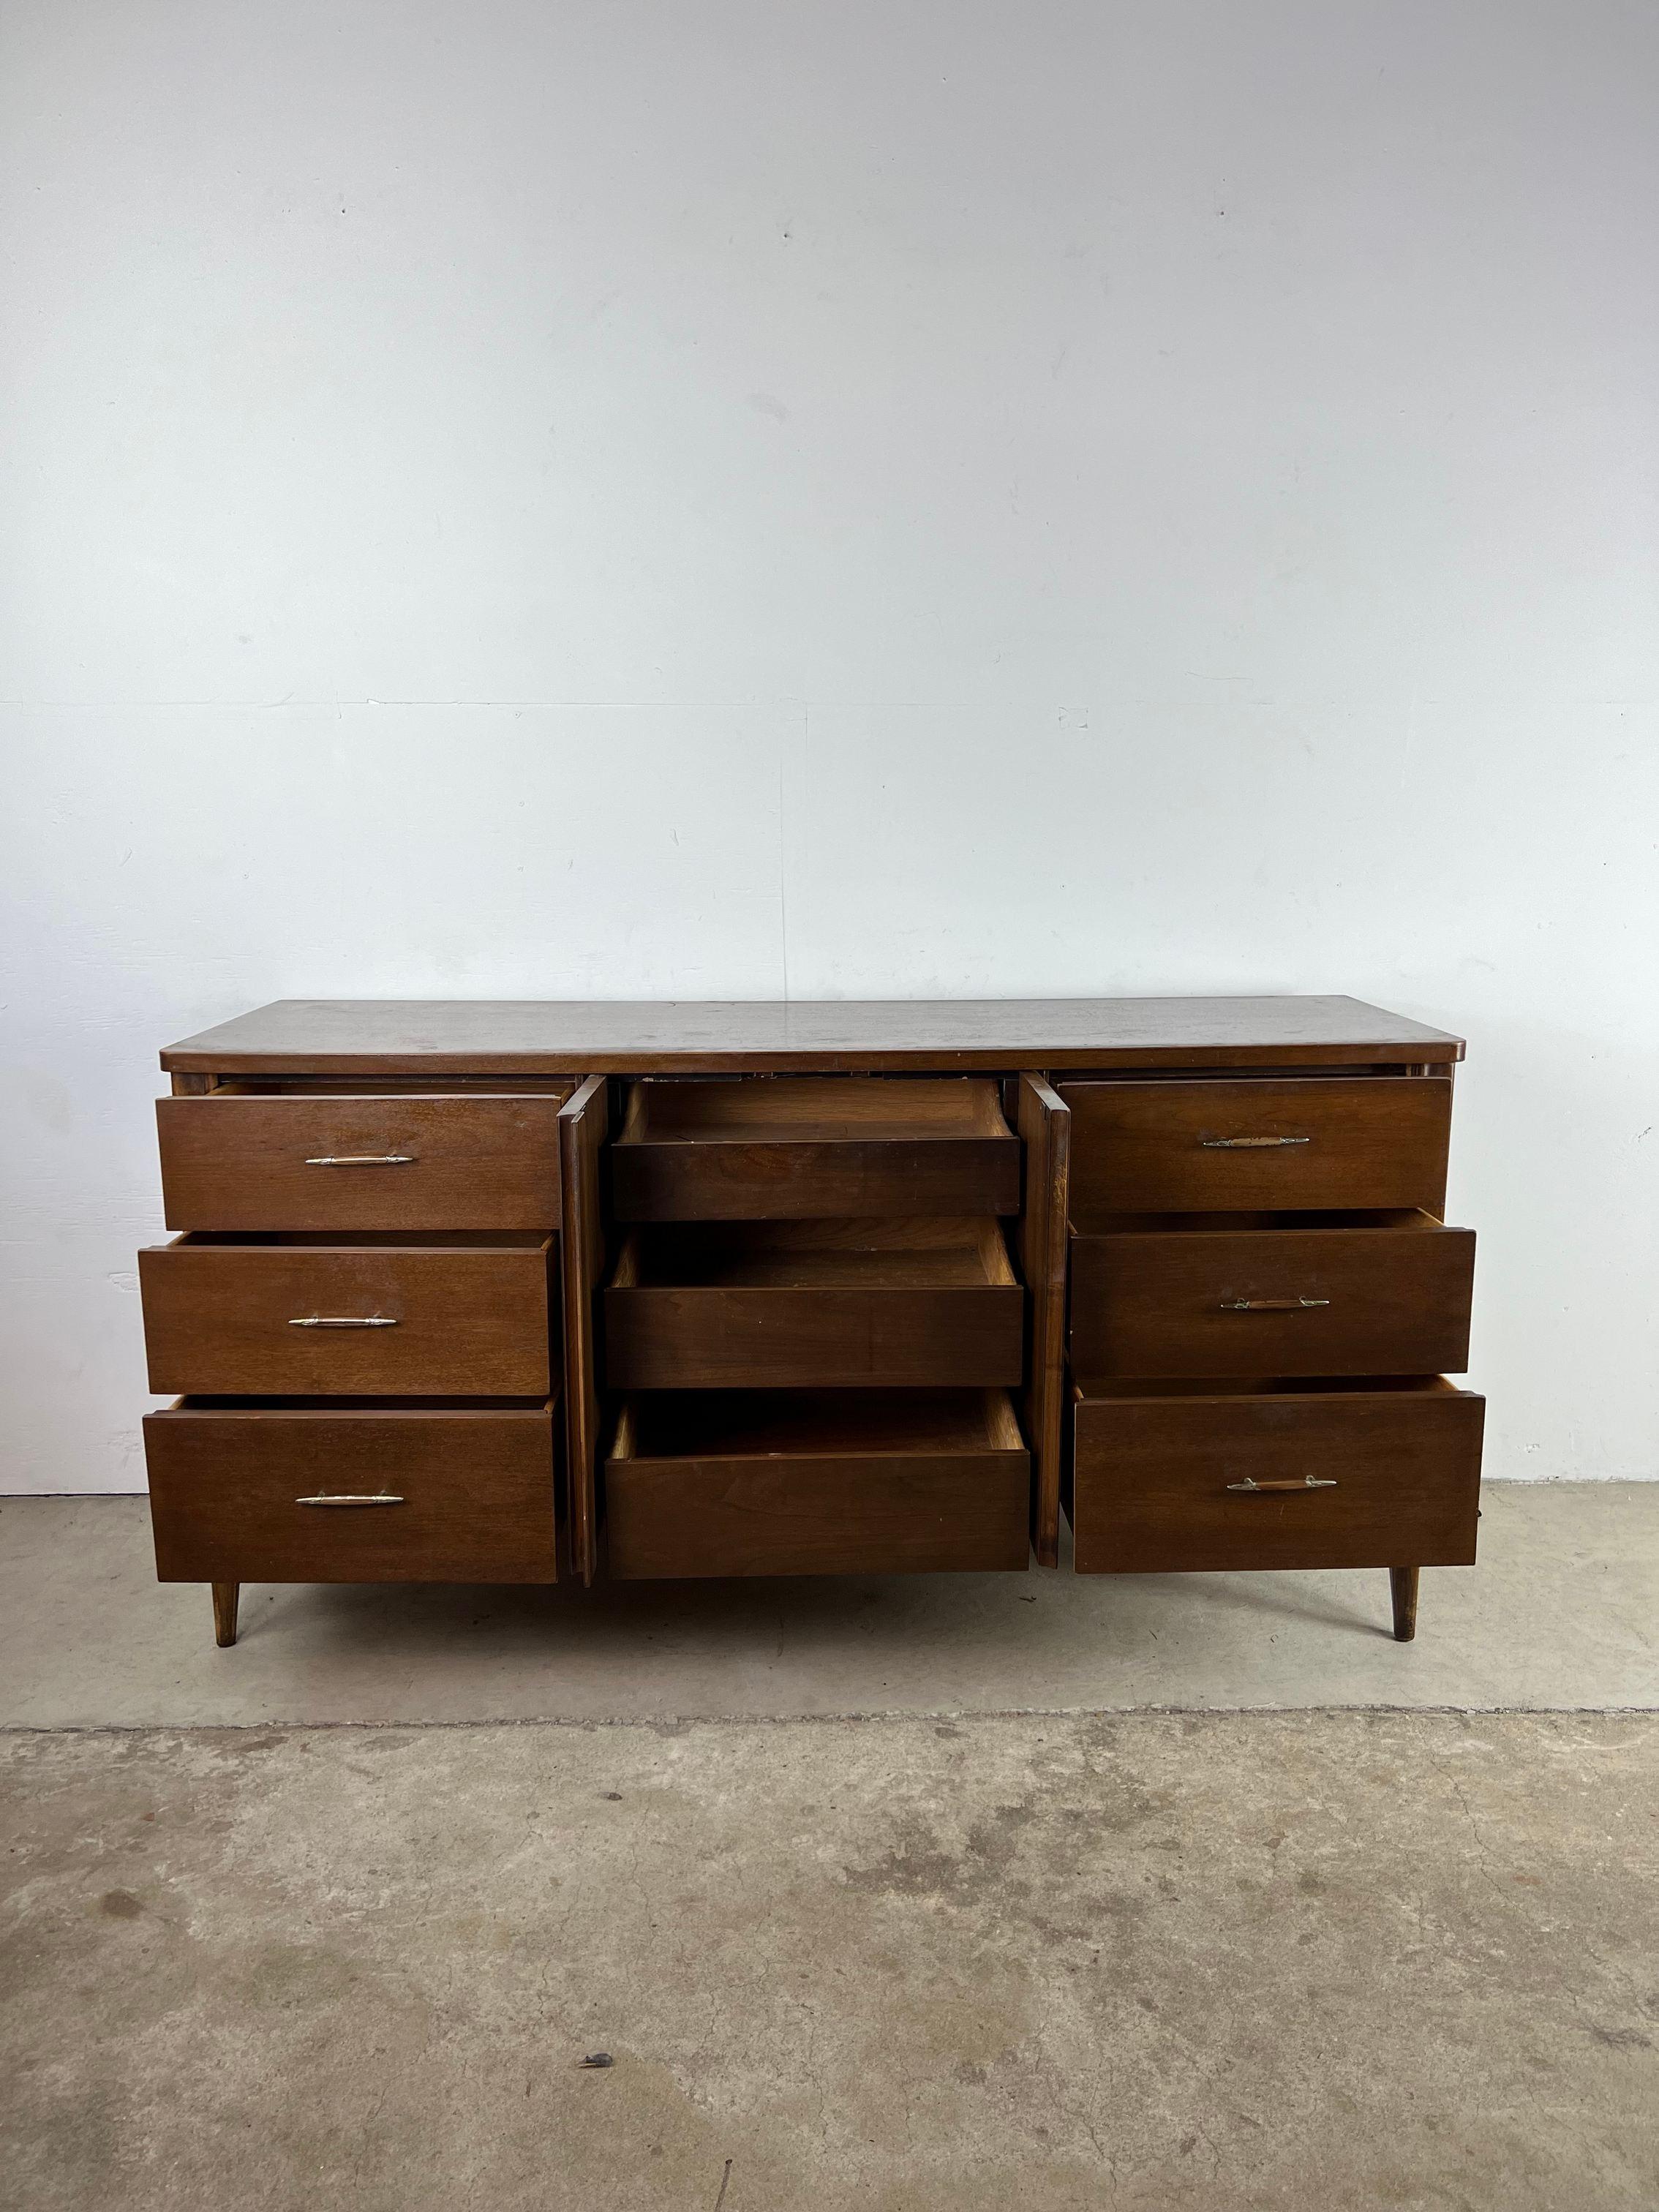 American Mid-Century Modern Lowboy Dresser from Saga Series by Broyhill